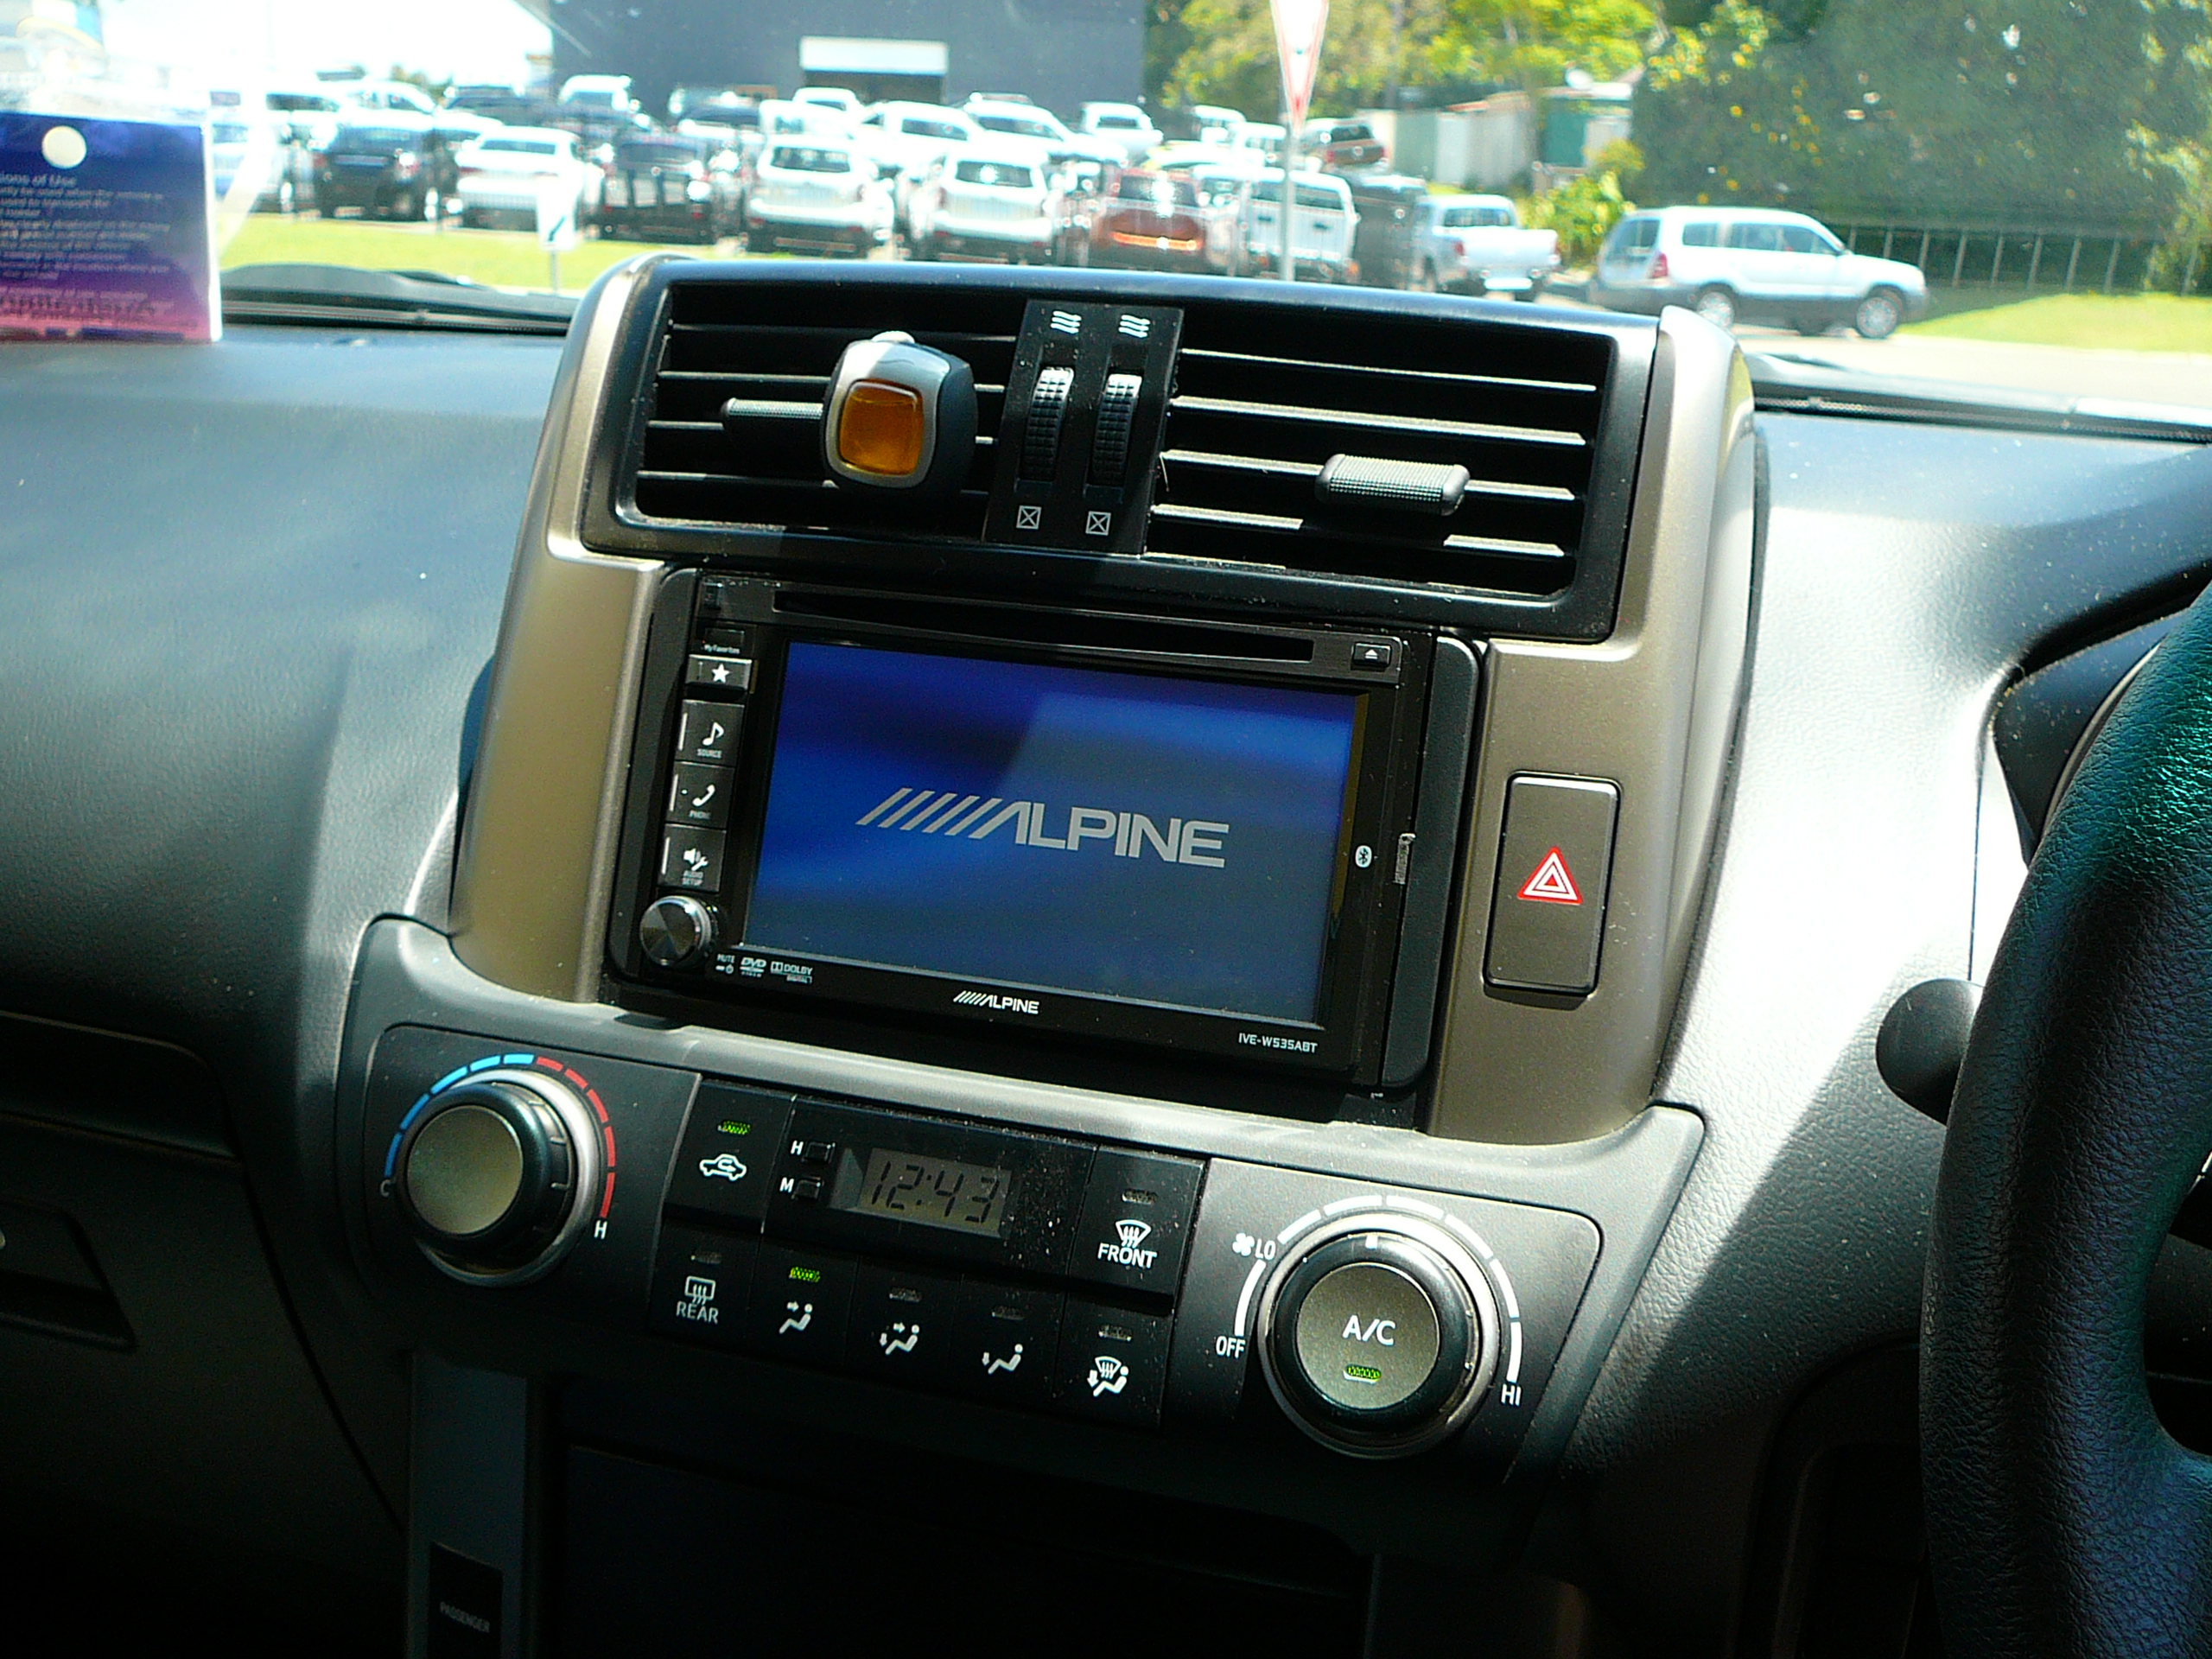 Toyota Prado 150 series, Alpine INE-W940 GPS Navigation Installation